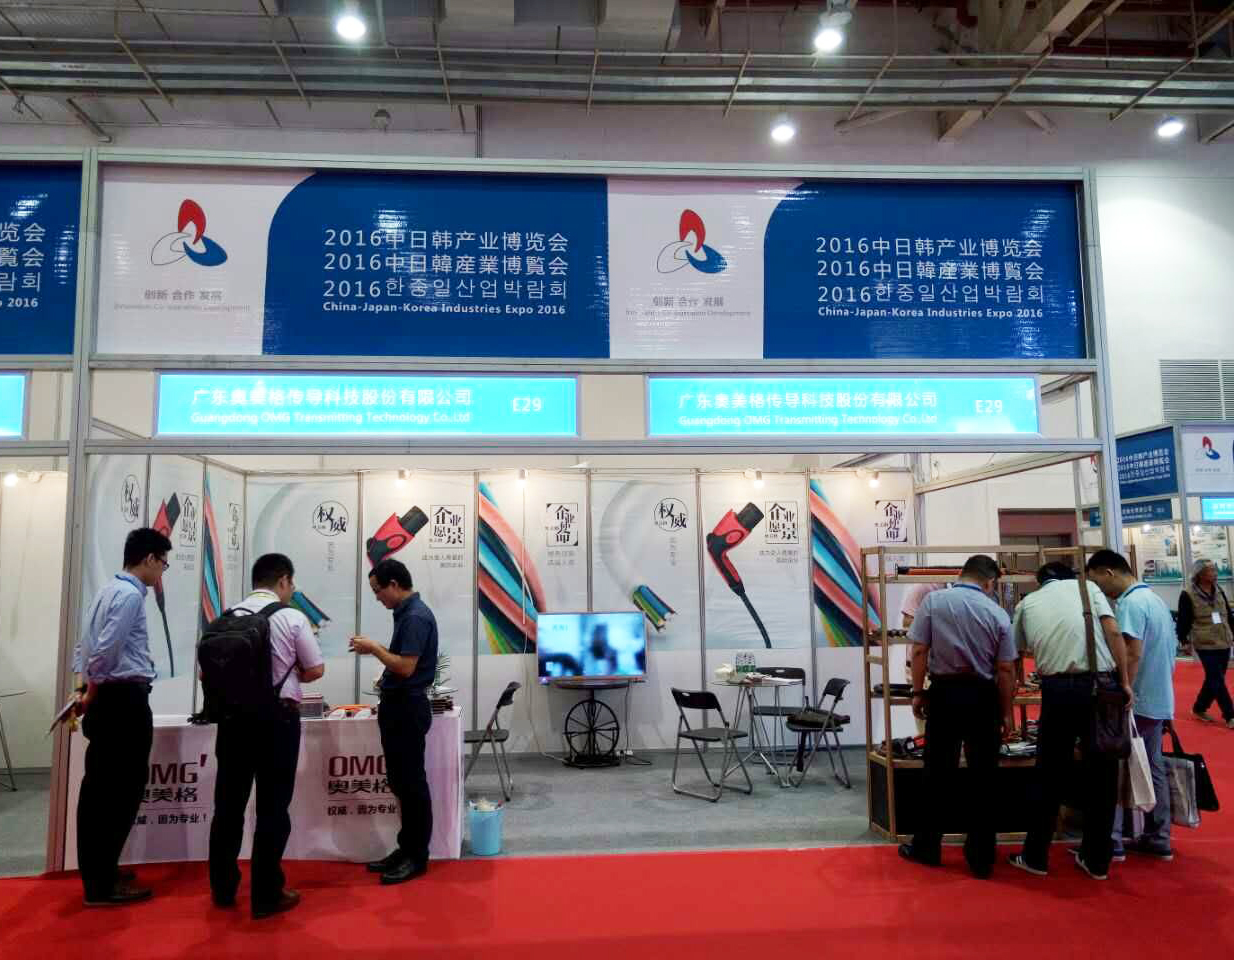 OMG ha partecipato all'Expo dell'industria Cina-Giappone-Corea del 2016 a Weifang, Shandong